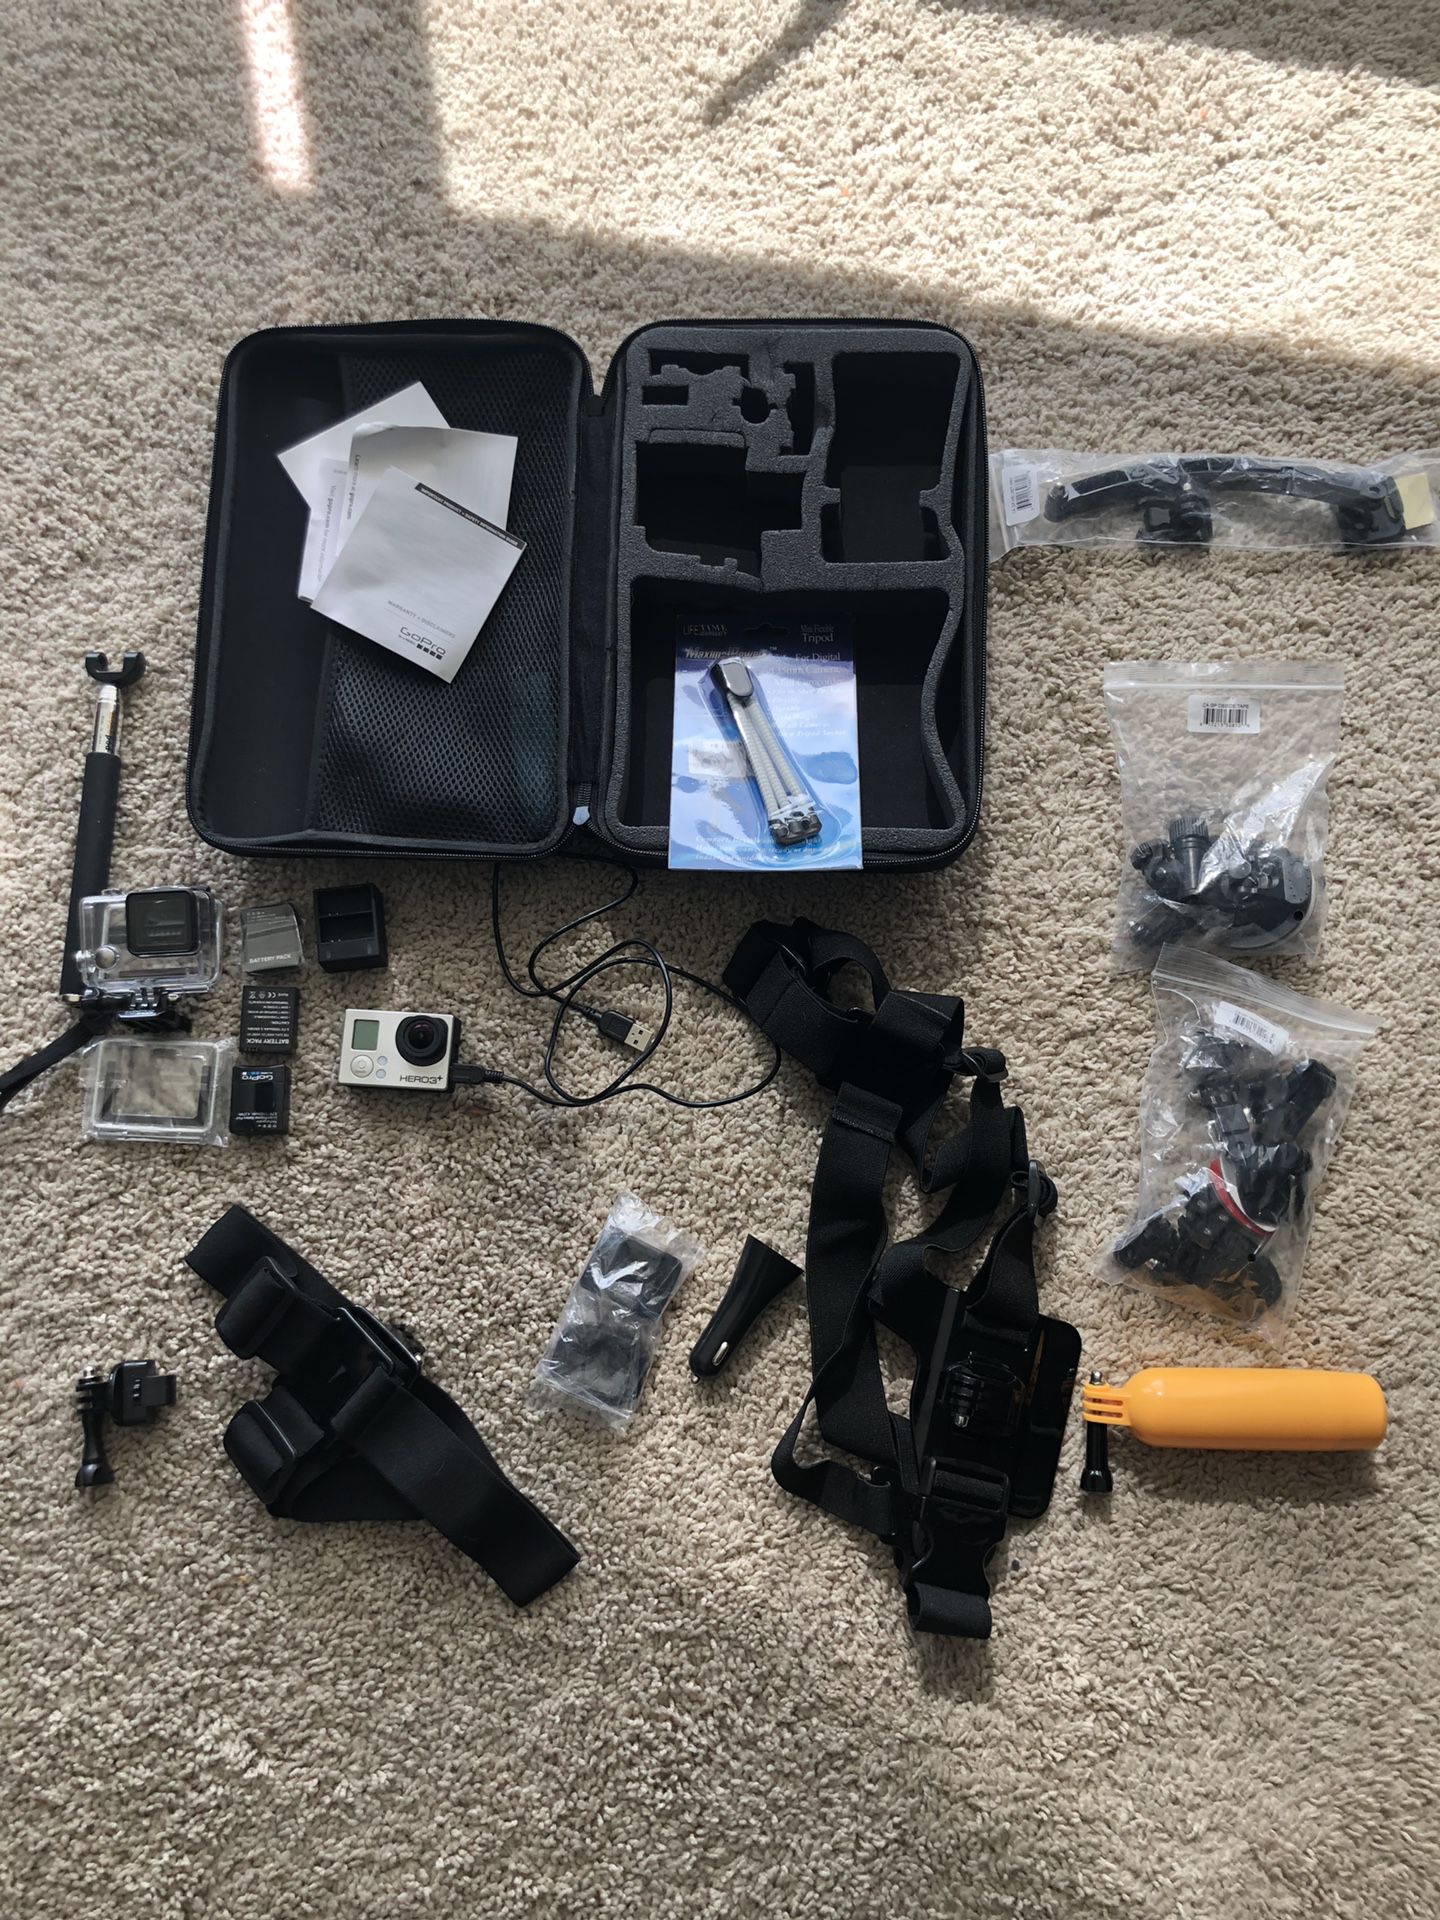 GoPro Hero 3 w/ accessory kit